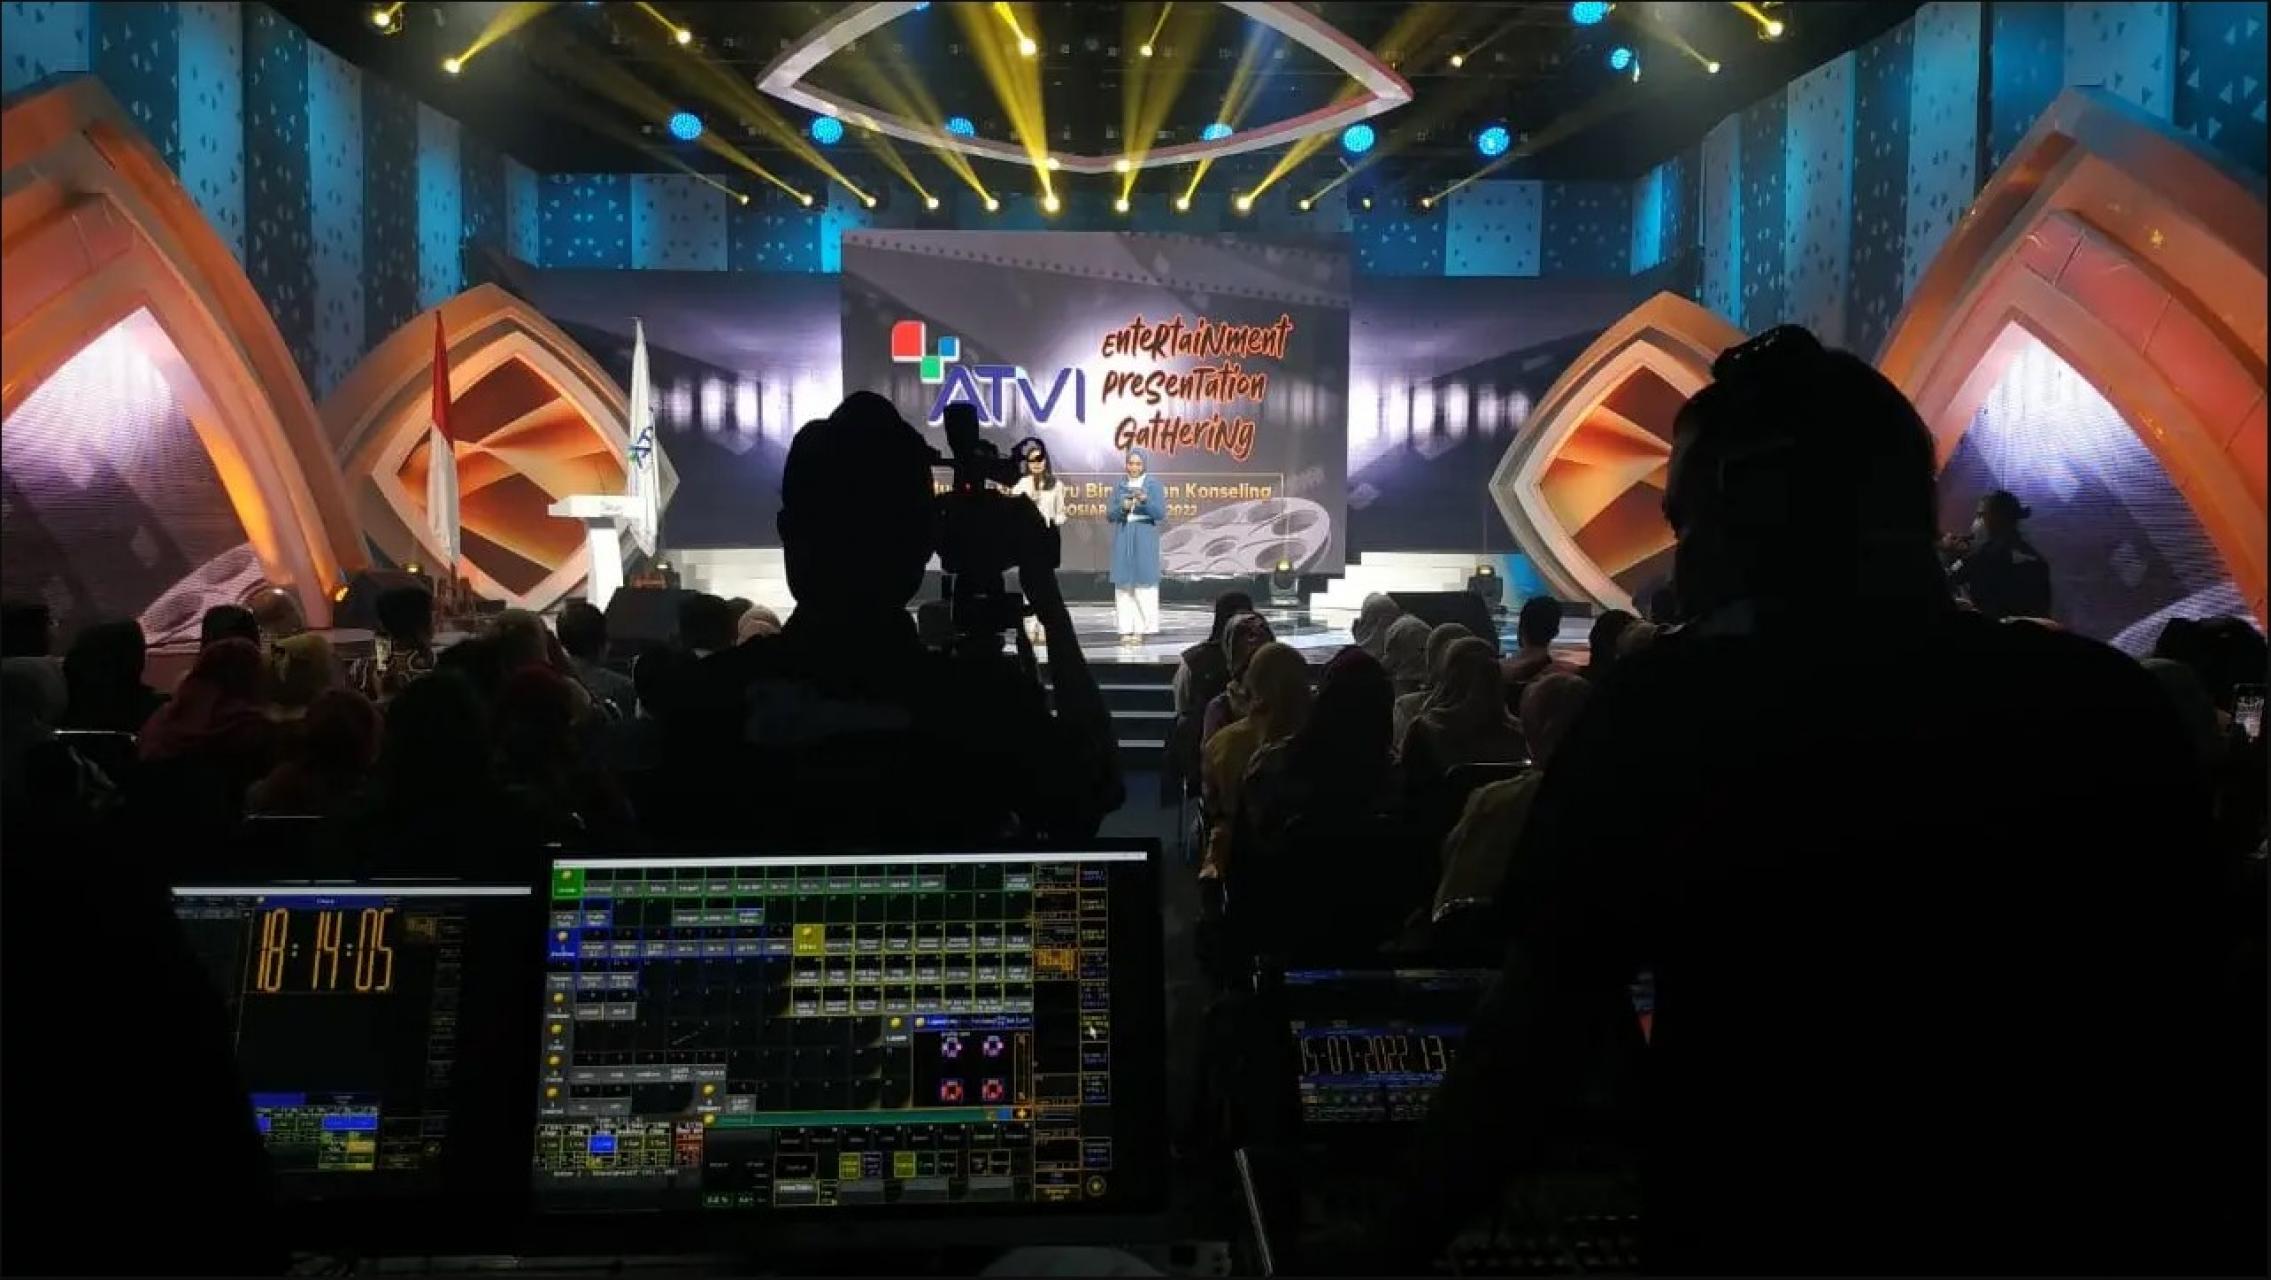 ATVI Jemput Bola Calon Mahasiswa Lewat Entertainment Presentation Gathering